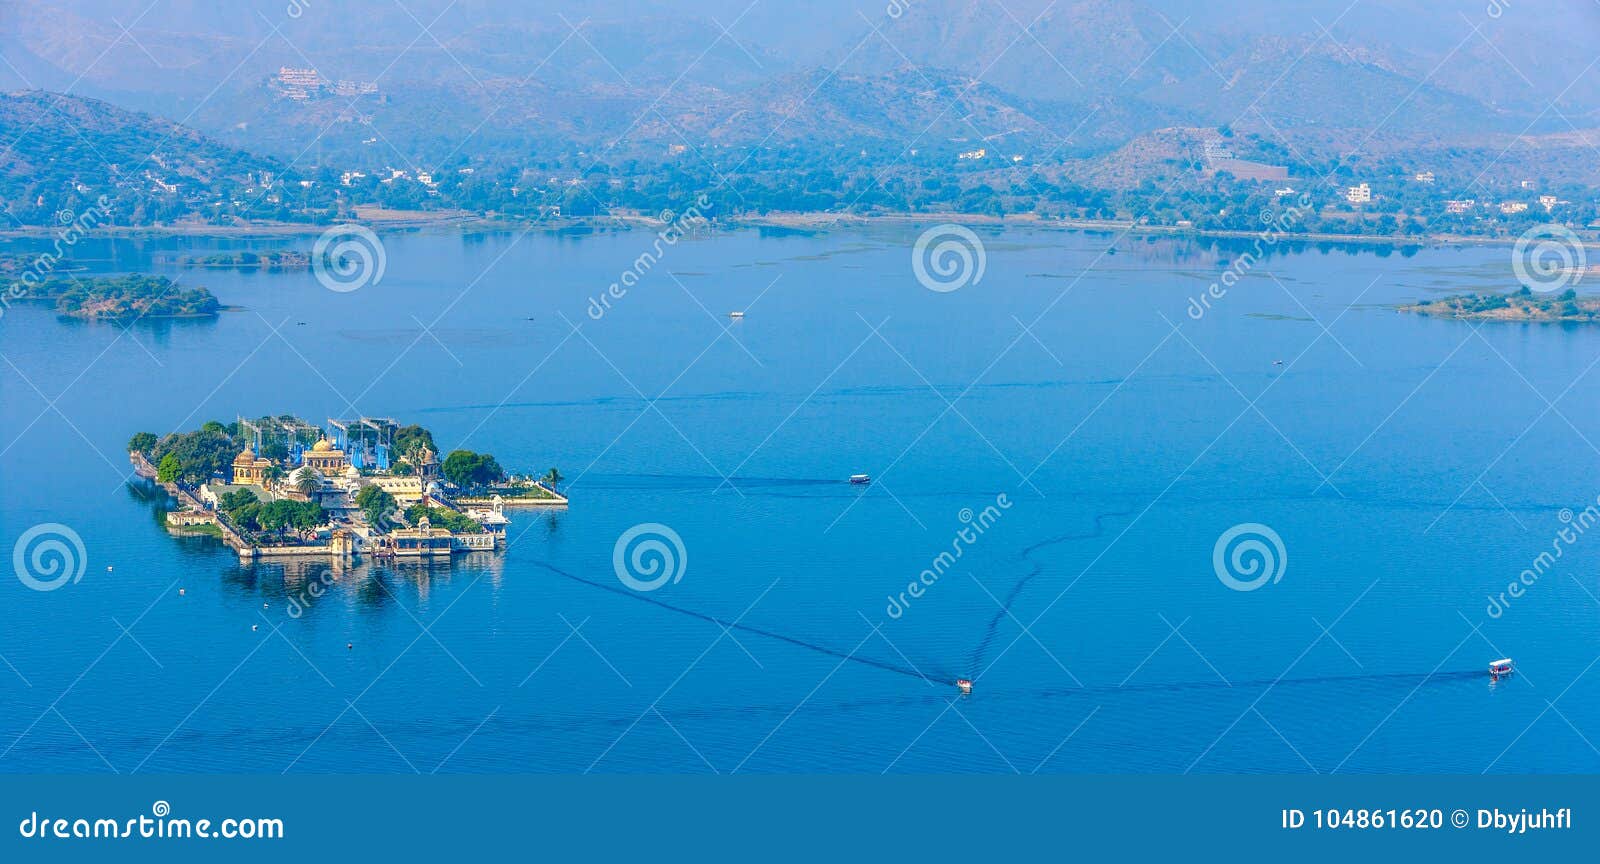 jag mandir palace, lake pichola, udaipur, rajasthan, india